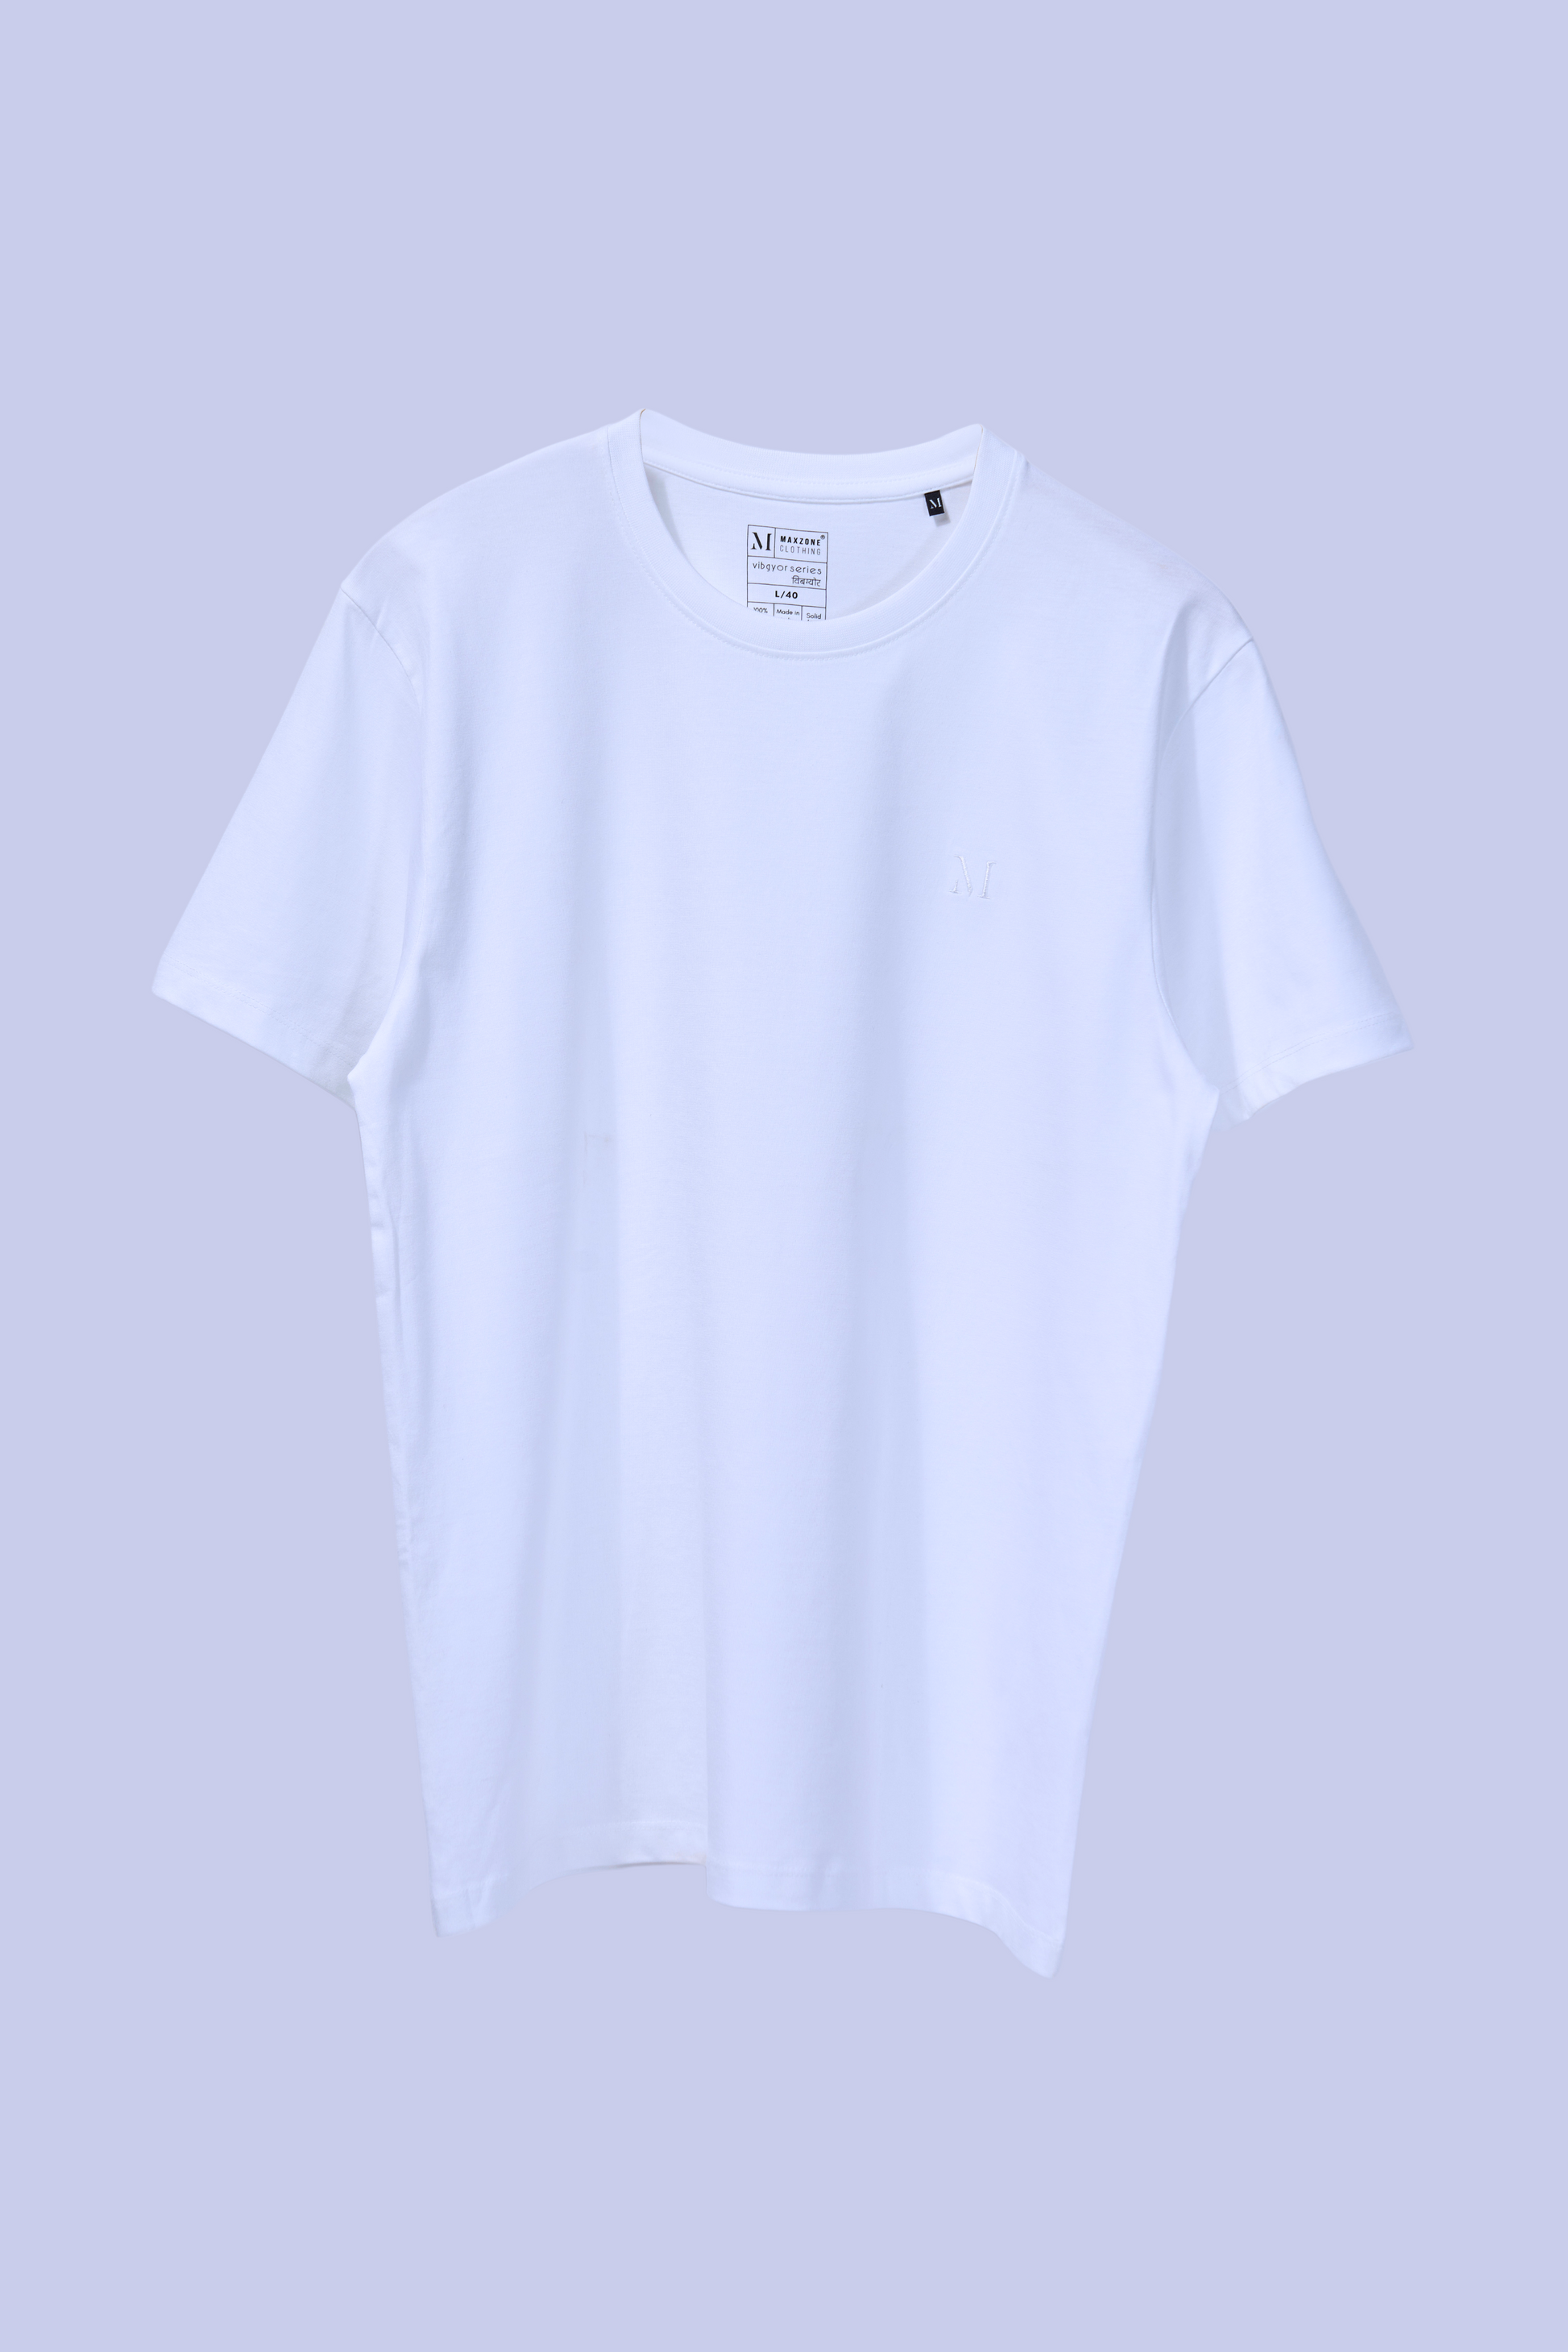 Lights T-Shirt Combo T-shirts Maxzone Clothing   